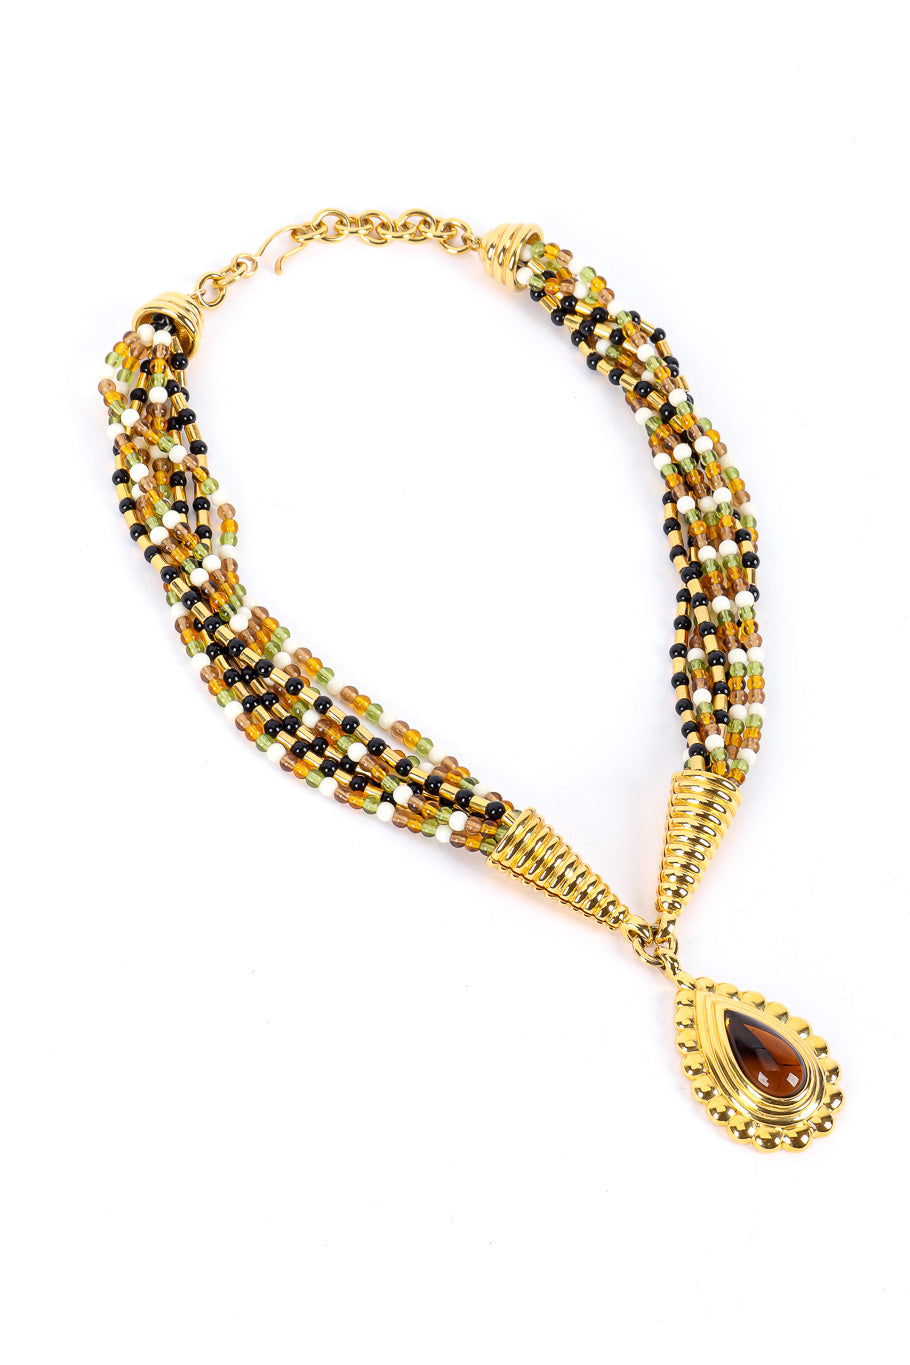 Vintage Monet 7-Strand Teardrop Necklace front view @Recessla